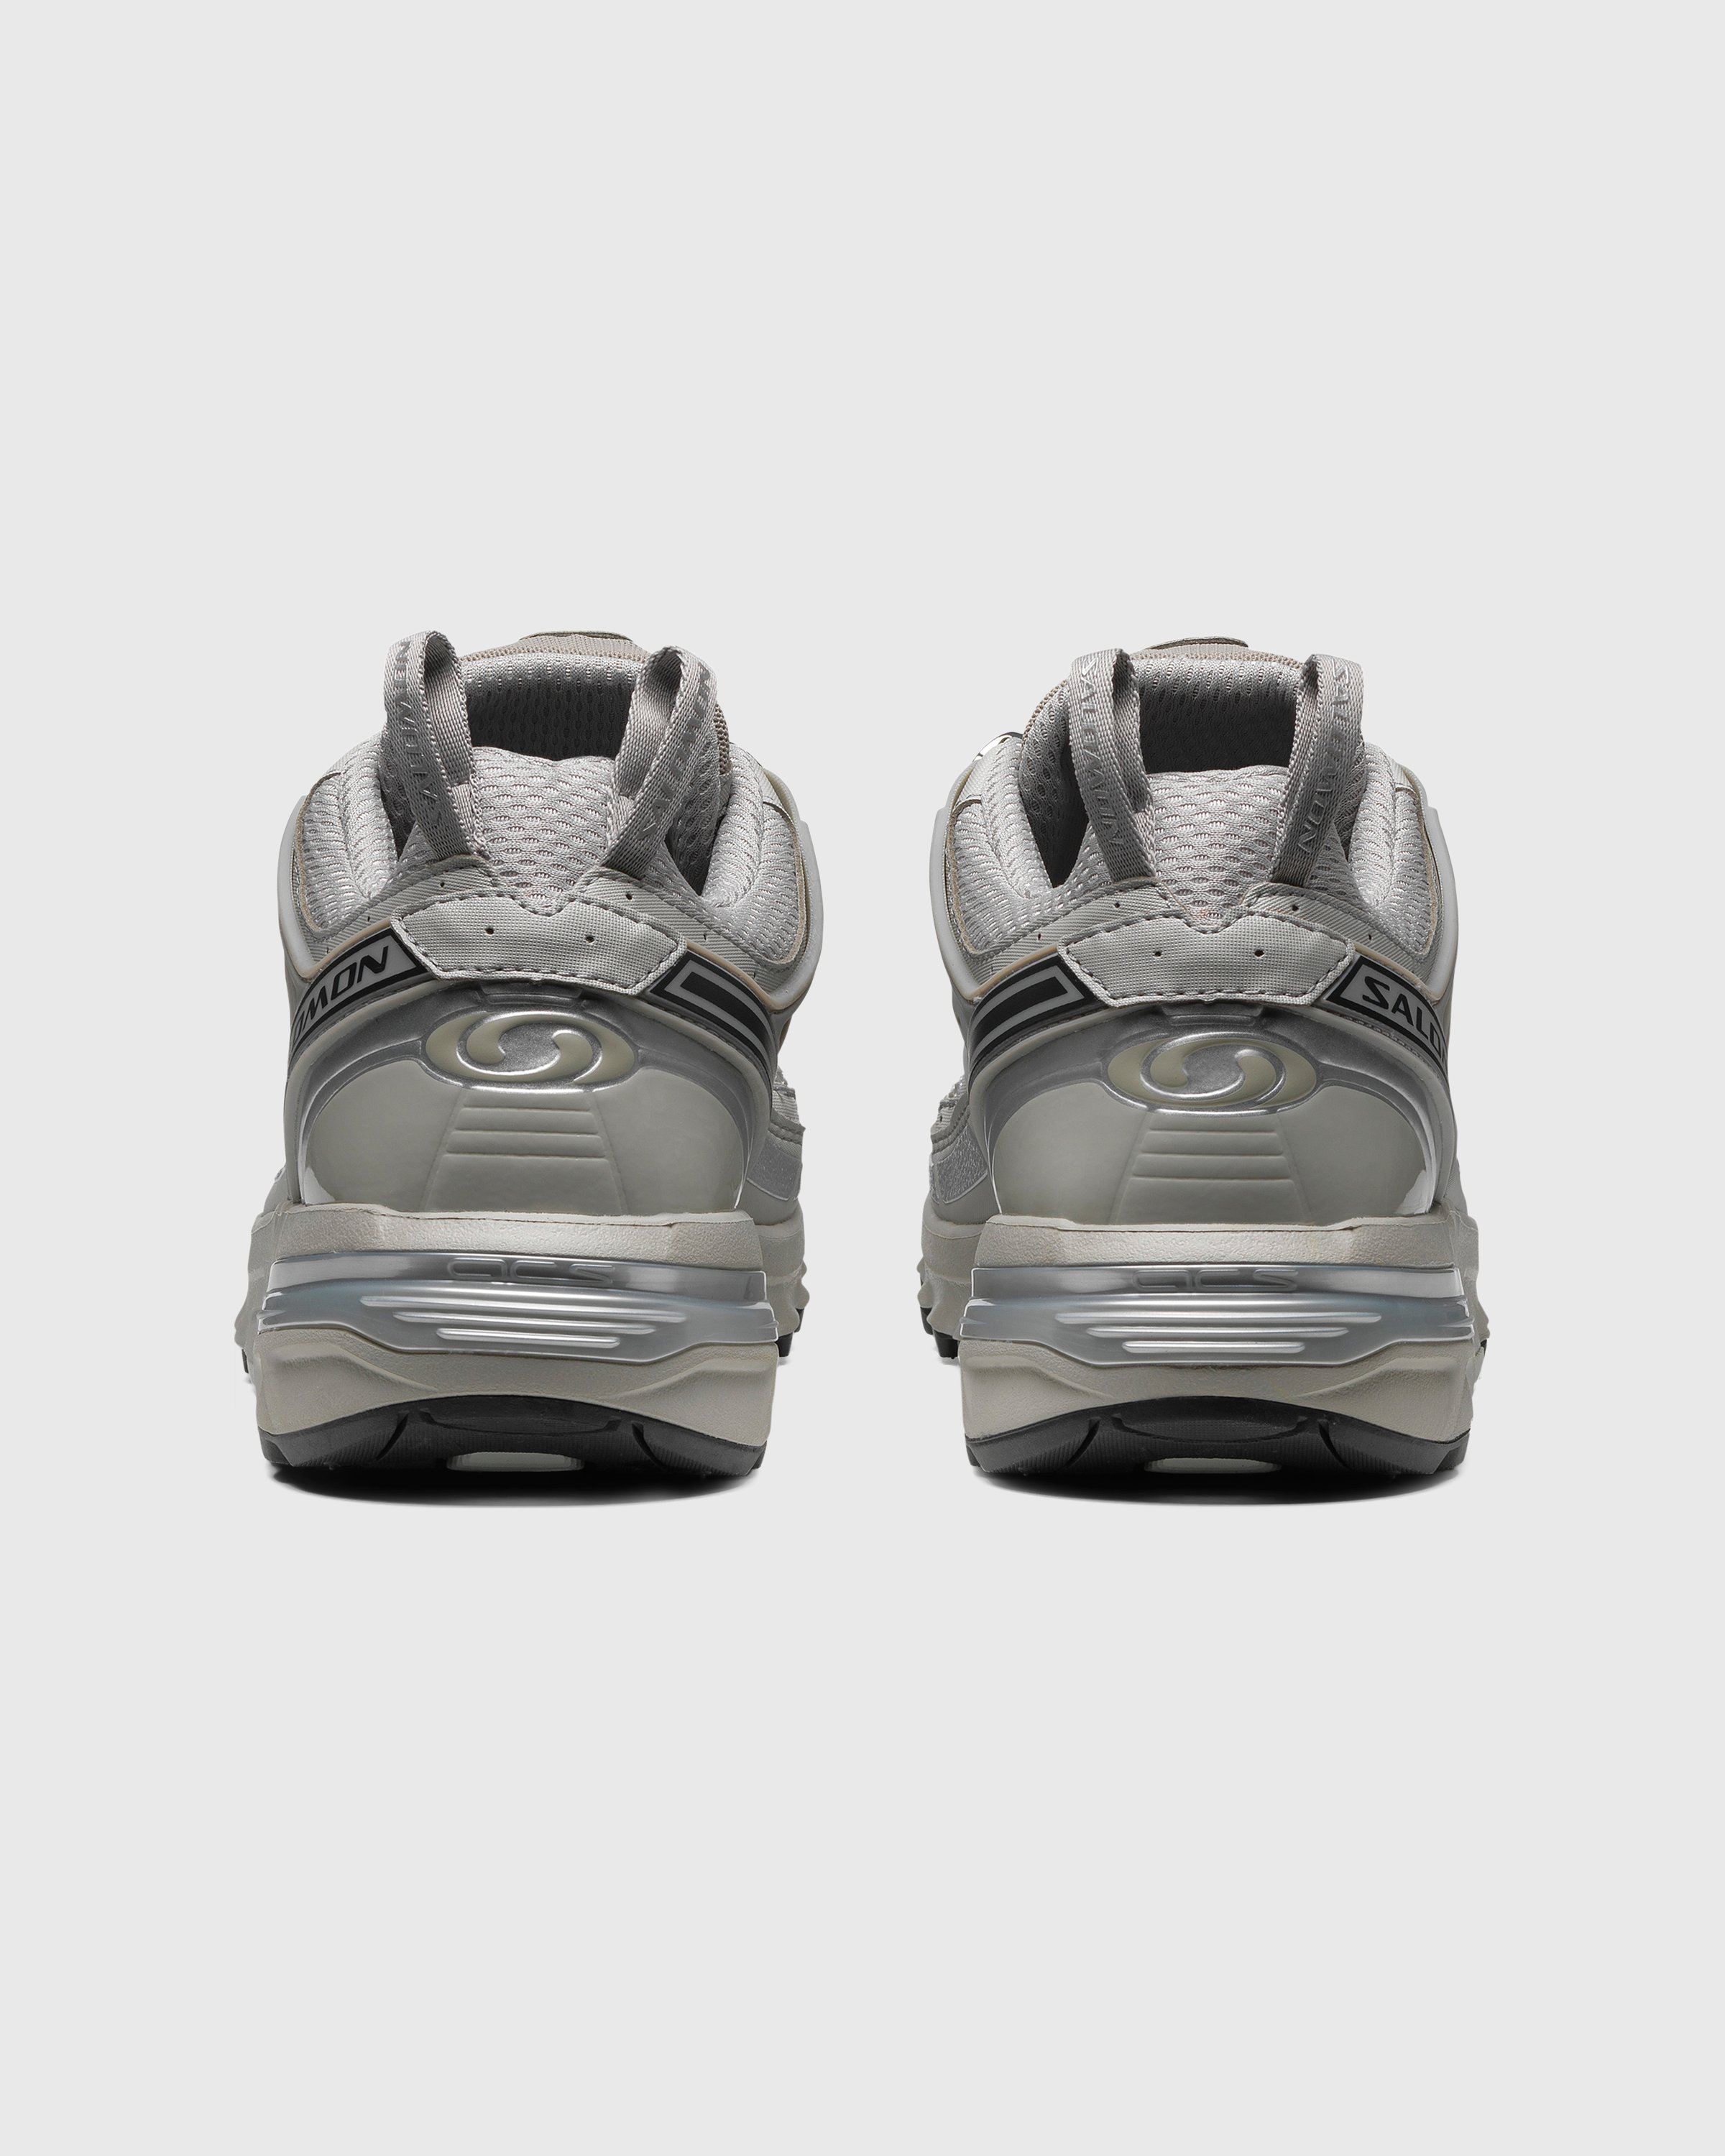 Salomon - ACS PRO Metal/Ghost Gray/Silver Metallic X - Footwear - Silver - Image 3